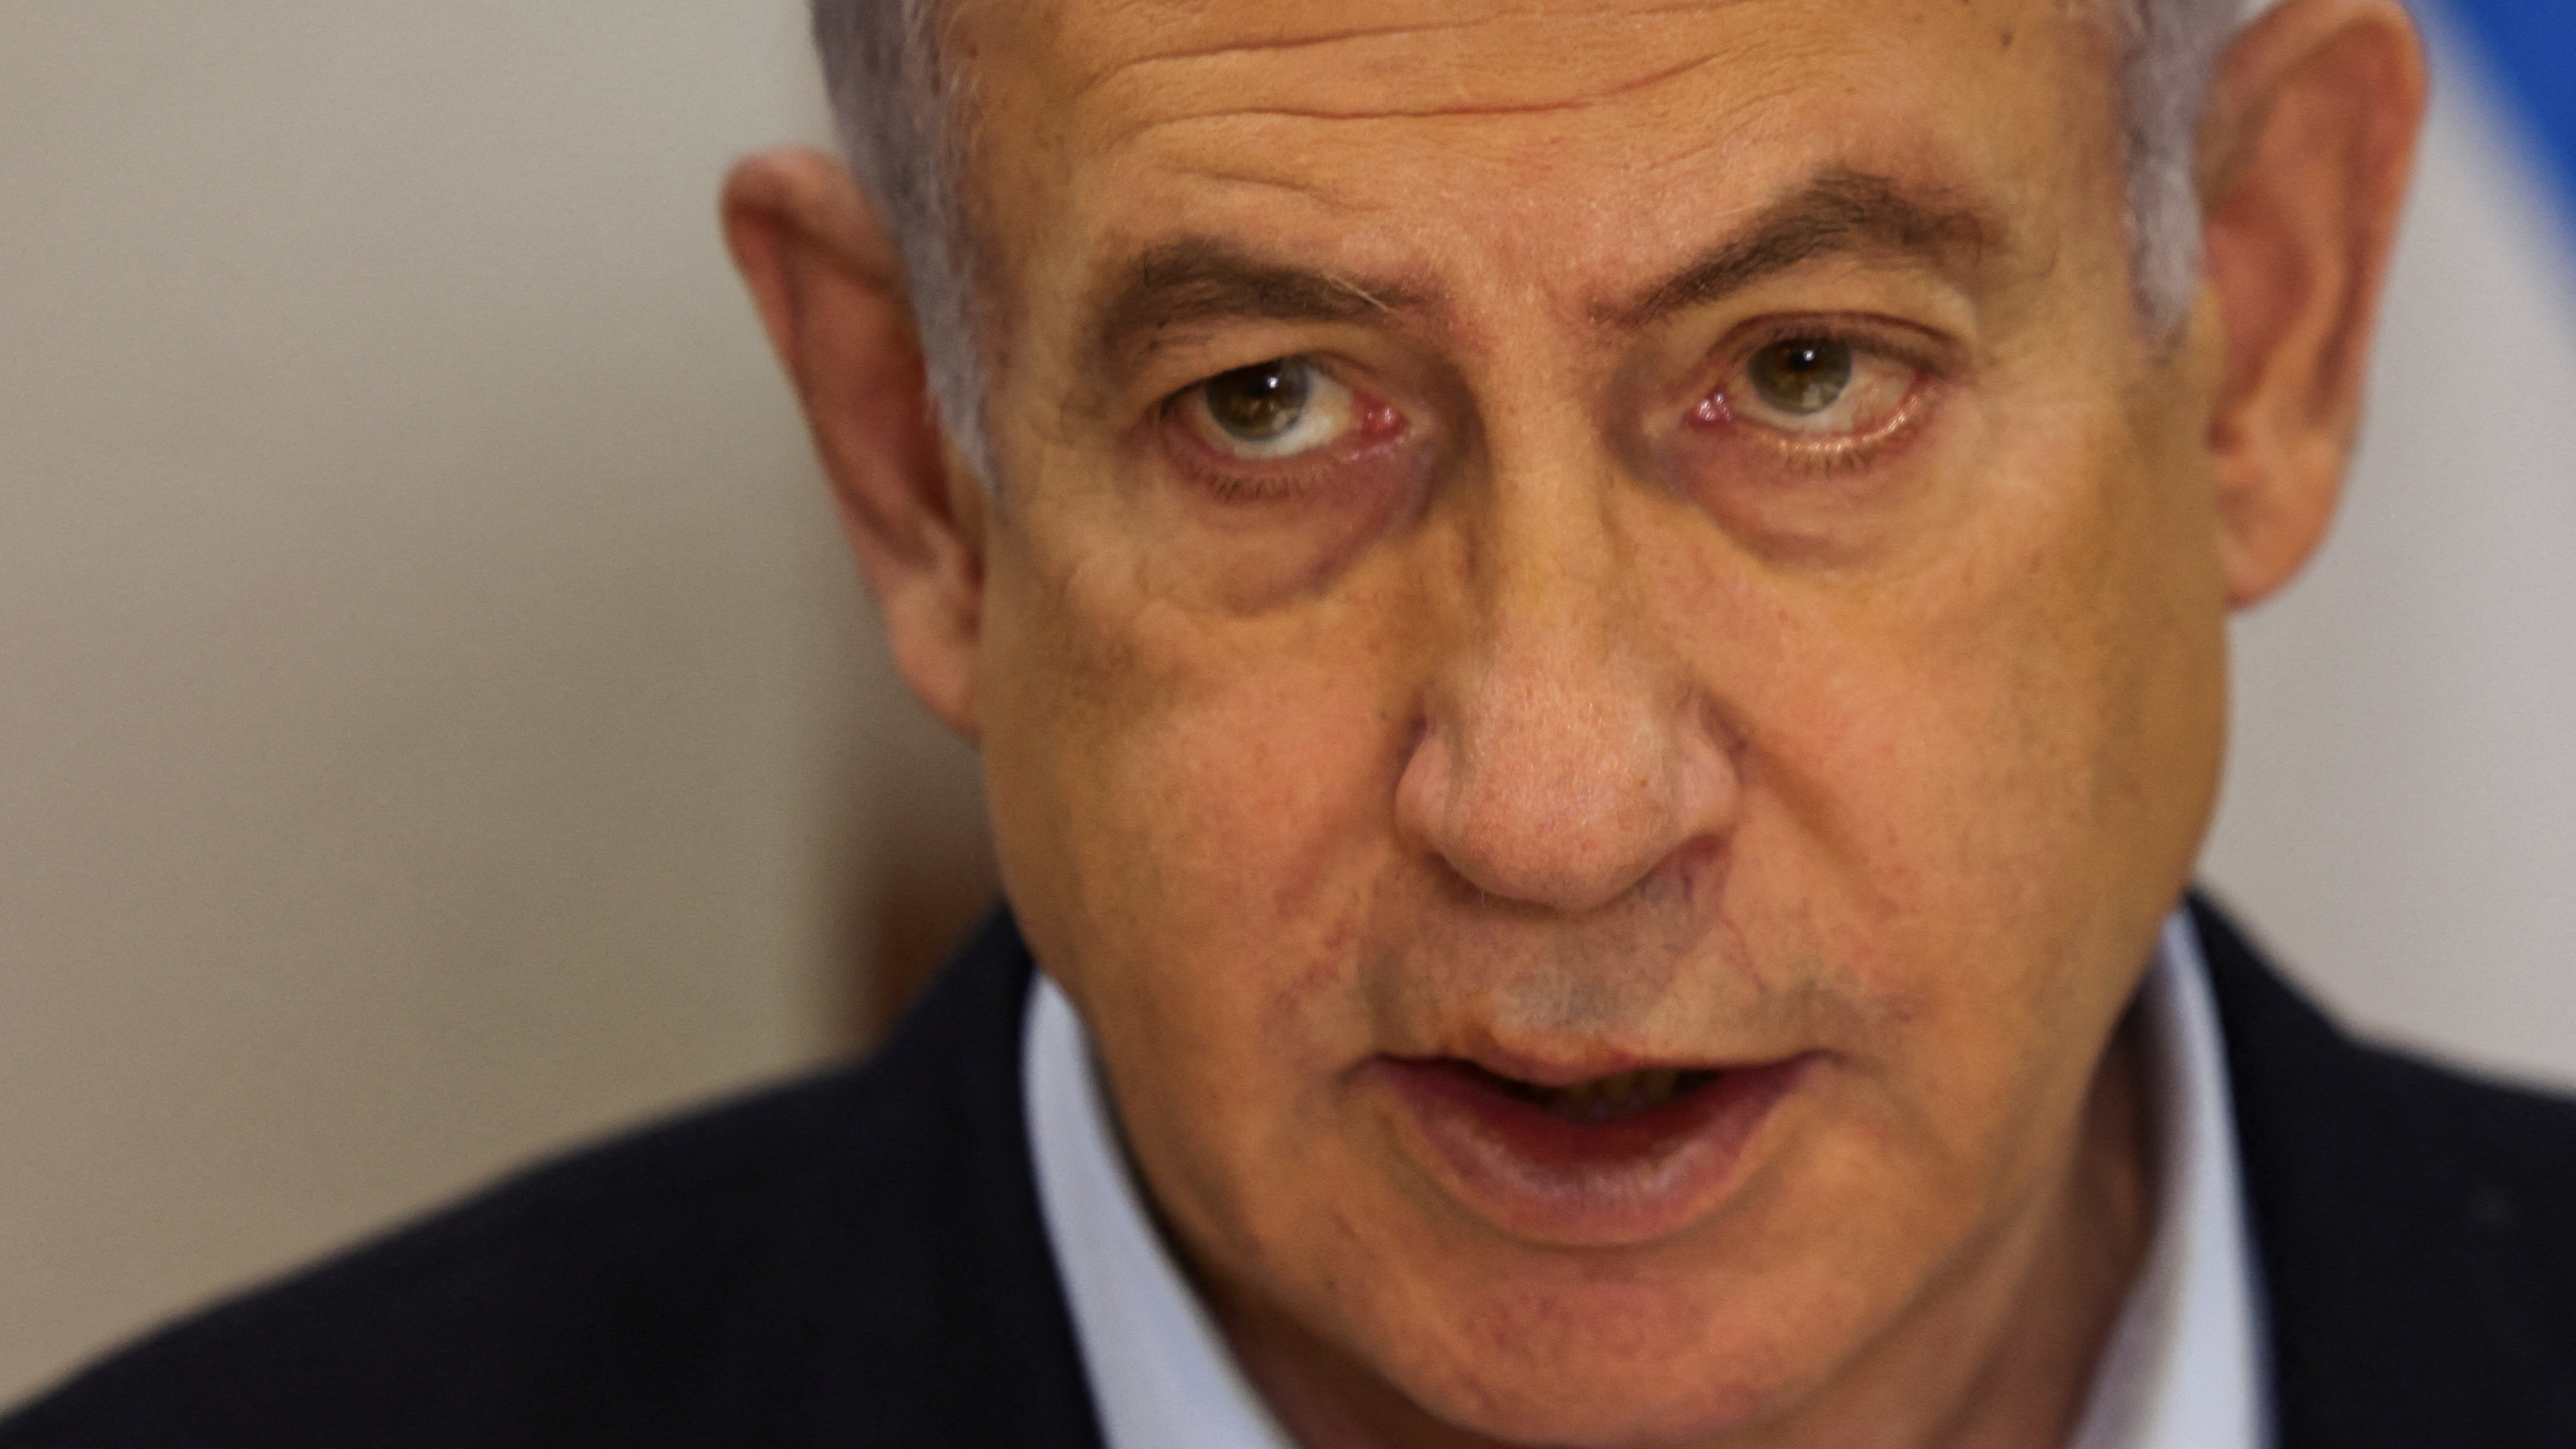 Netanyahu has criticized Qatar's mediation role in Gaza. /CFP